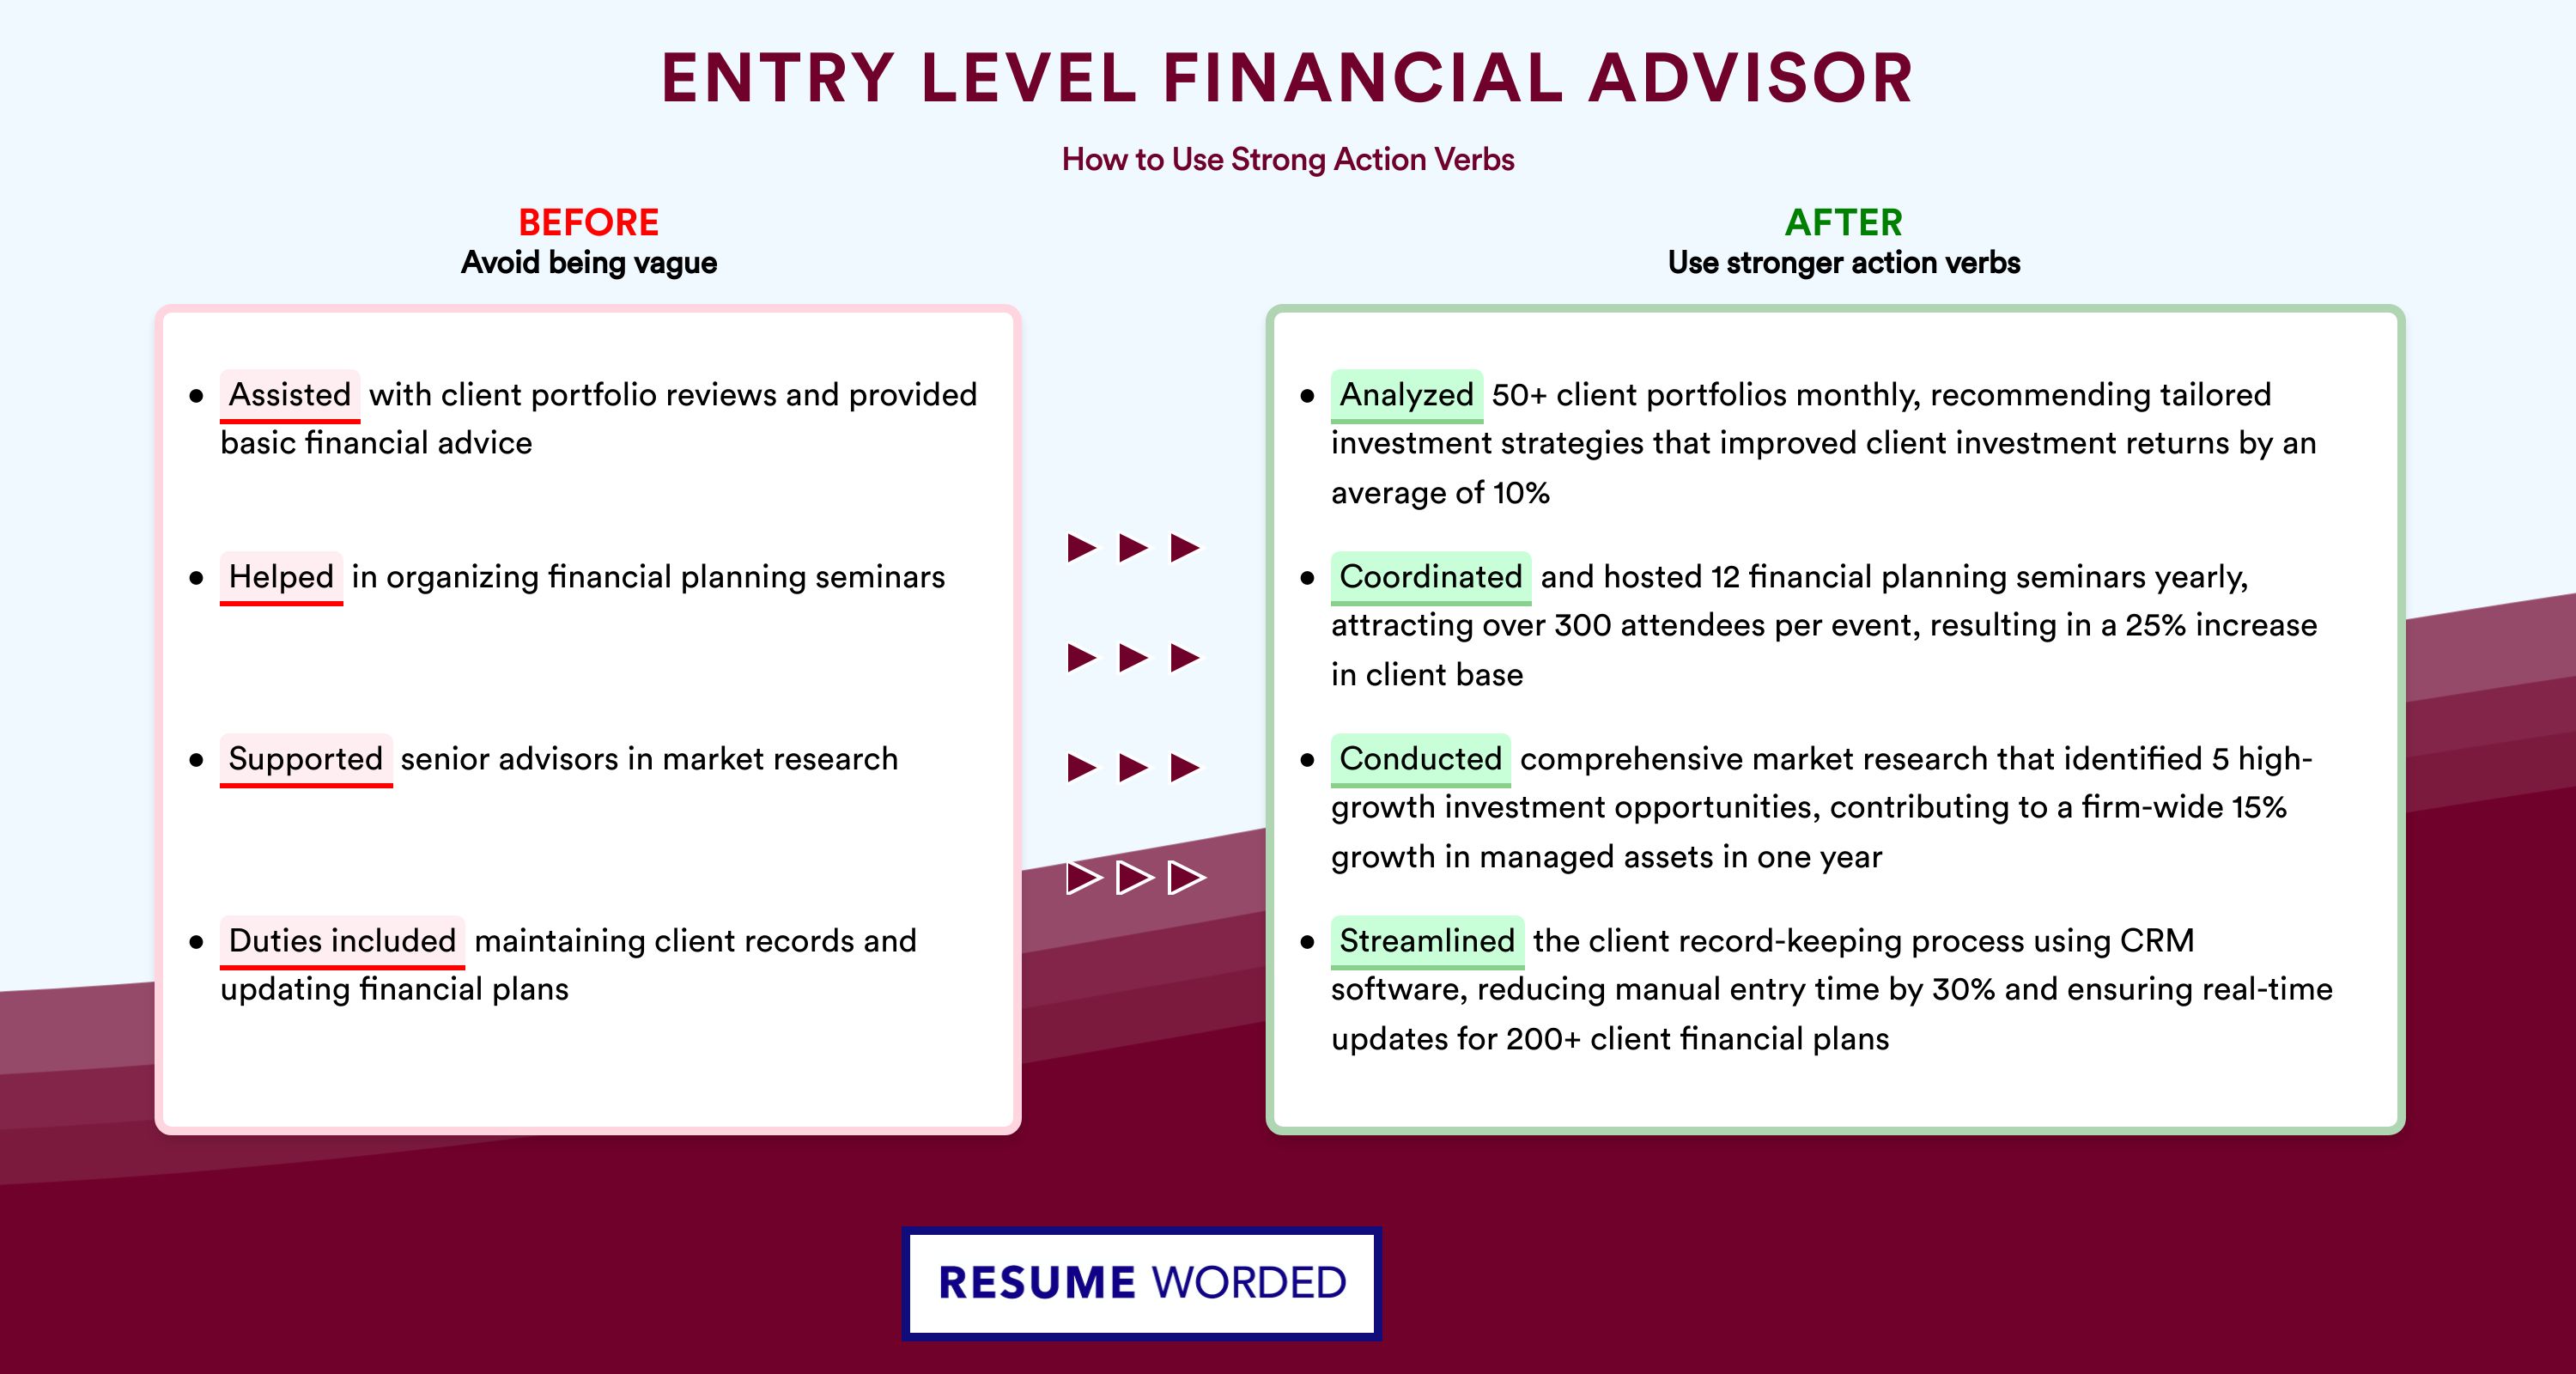 Action Verbs for Entry Level Financial Advisor